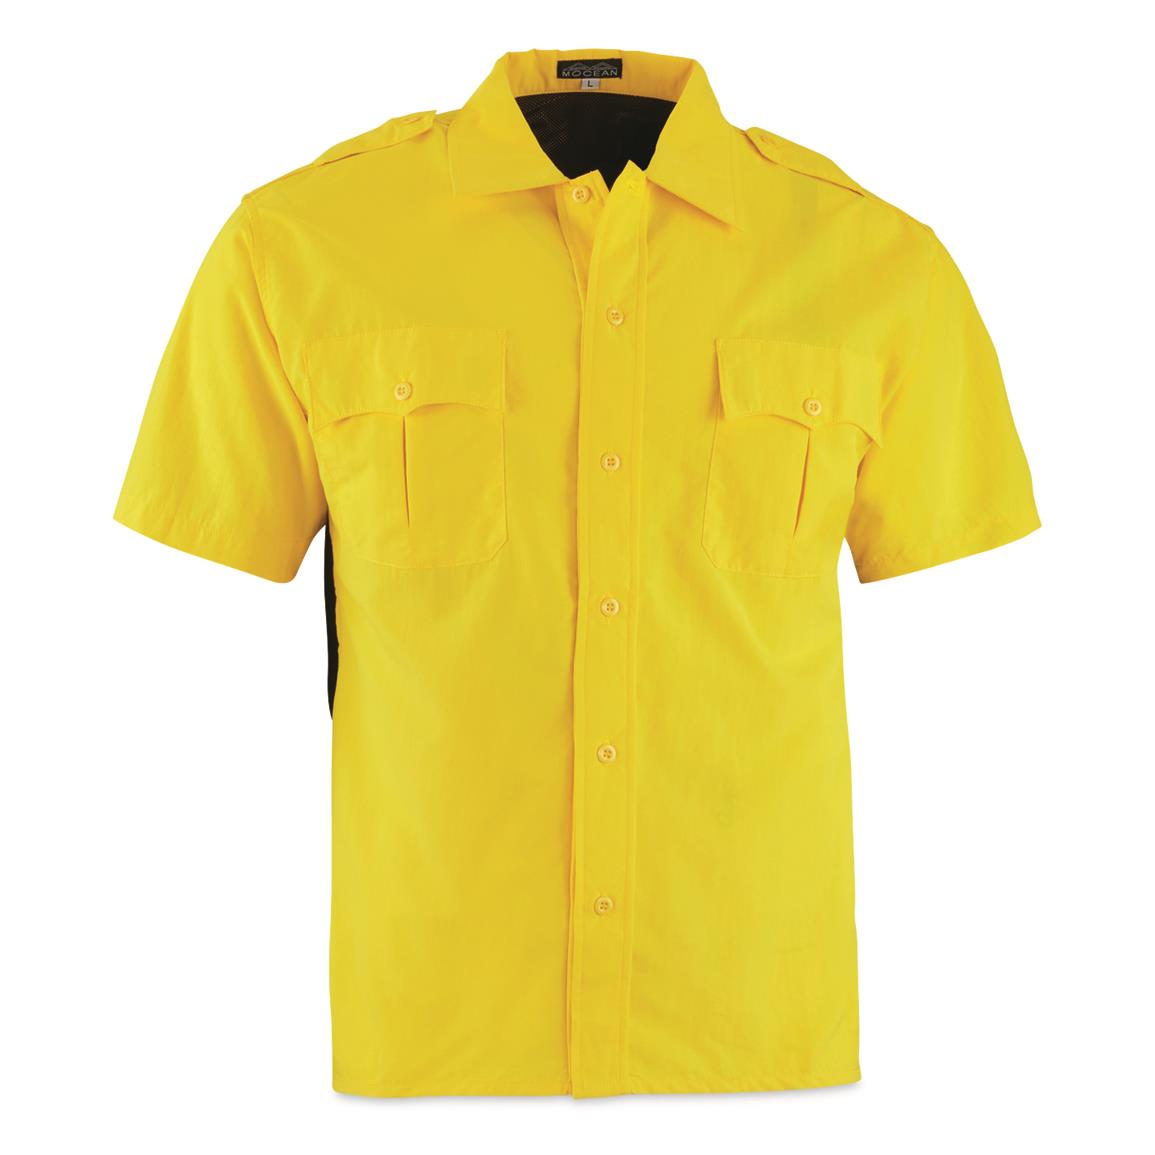 U.S. Police Surplus Short-sleeve Mocean Velocity Patrol Shirt, New, Yellow